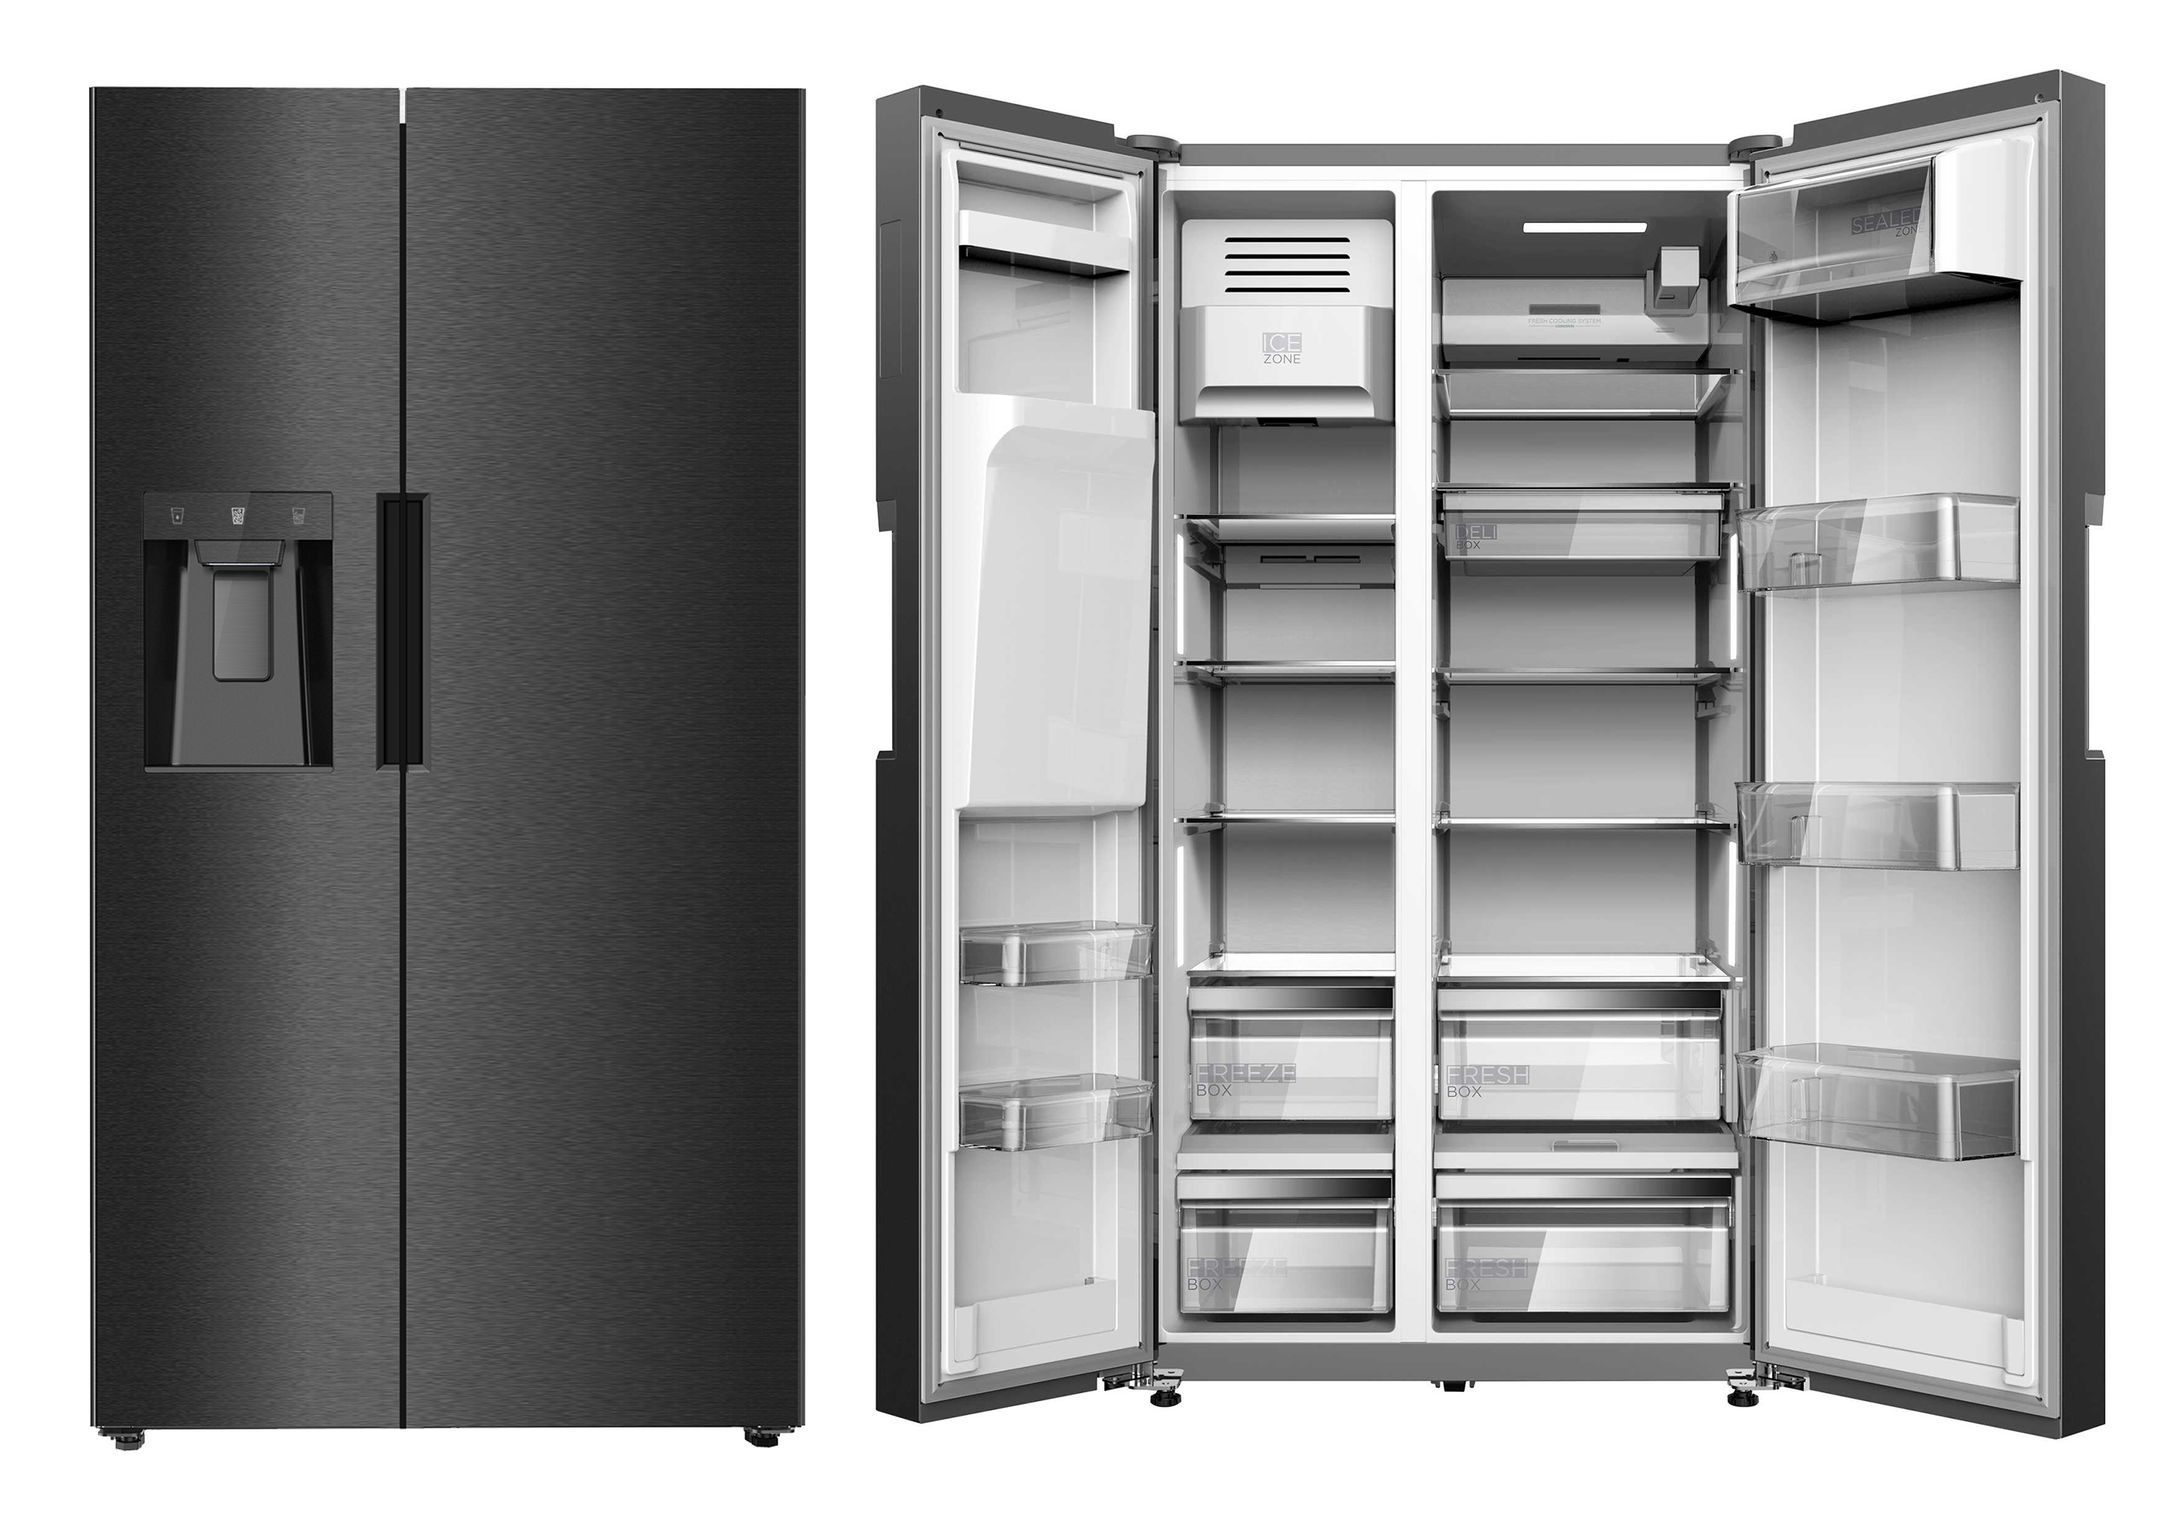 iF Design - North American French door series refrigerators